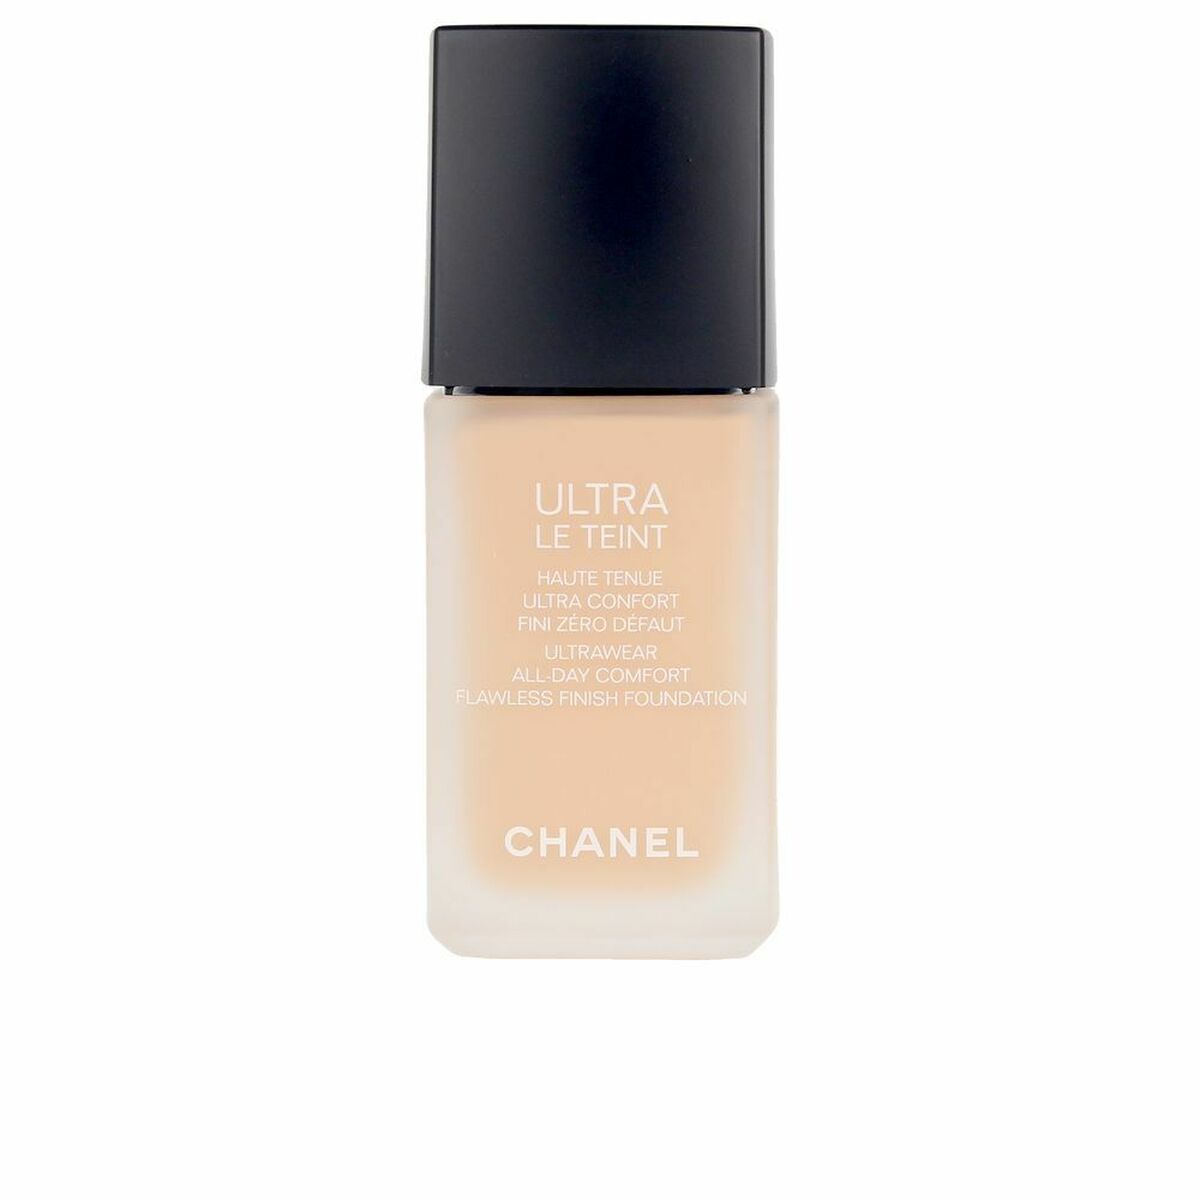 Kaufe Flüssig-Make-up Chanel Le Teint Ultra 30 ml B30 bei AWK Flagship um € 77.00